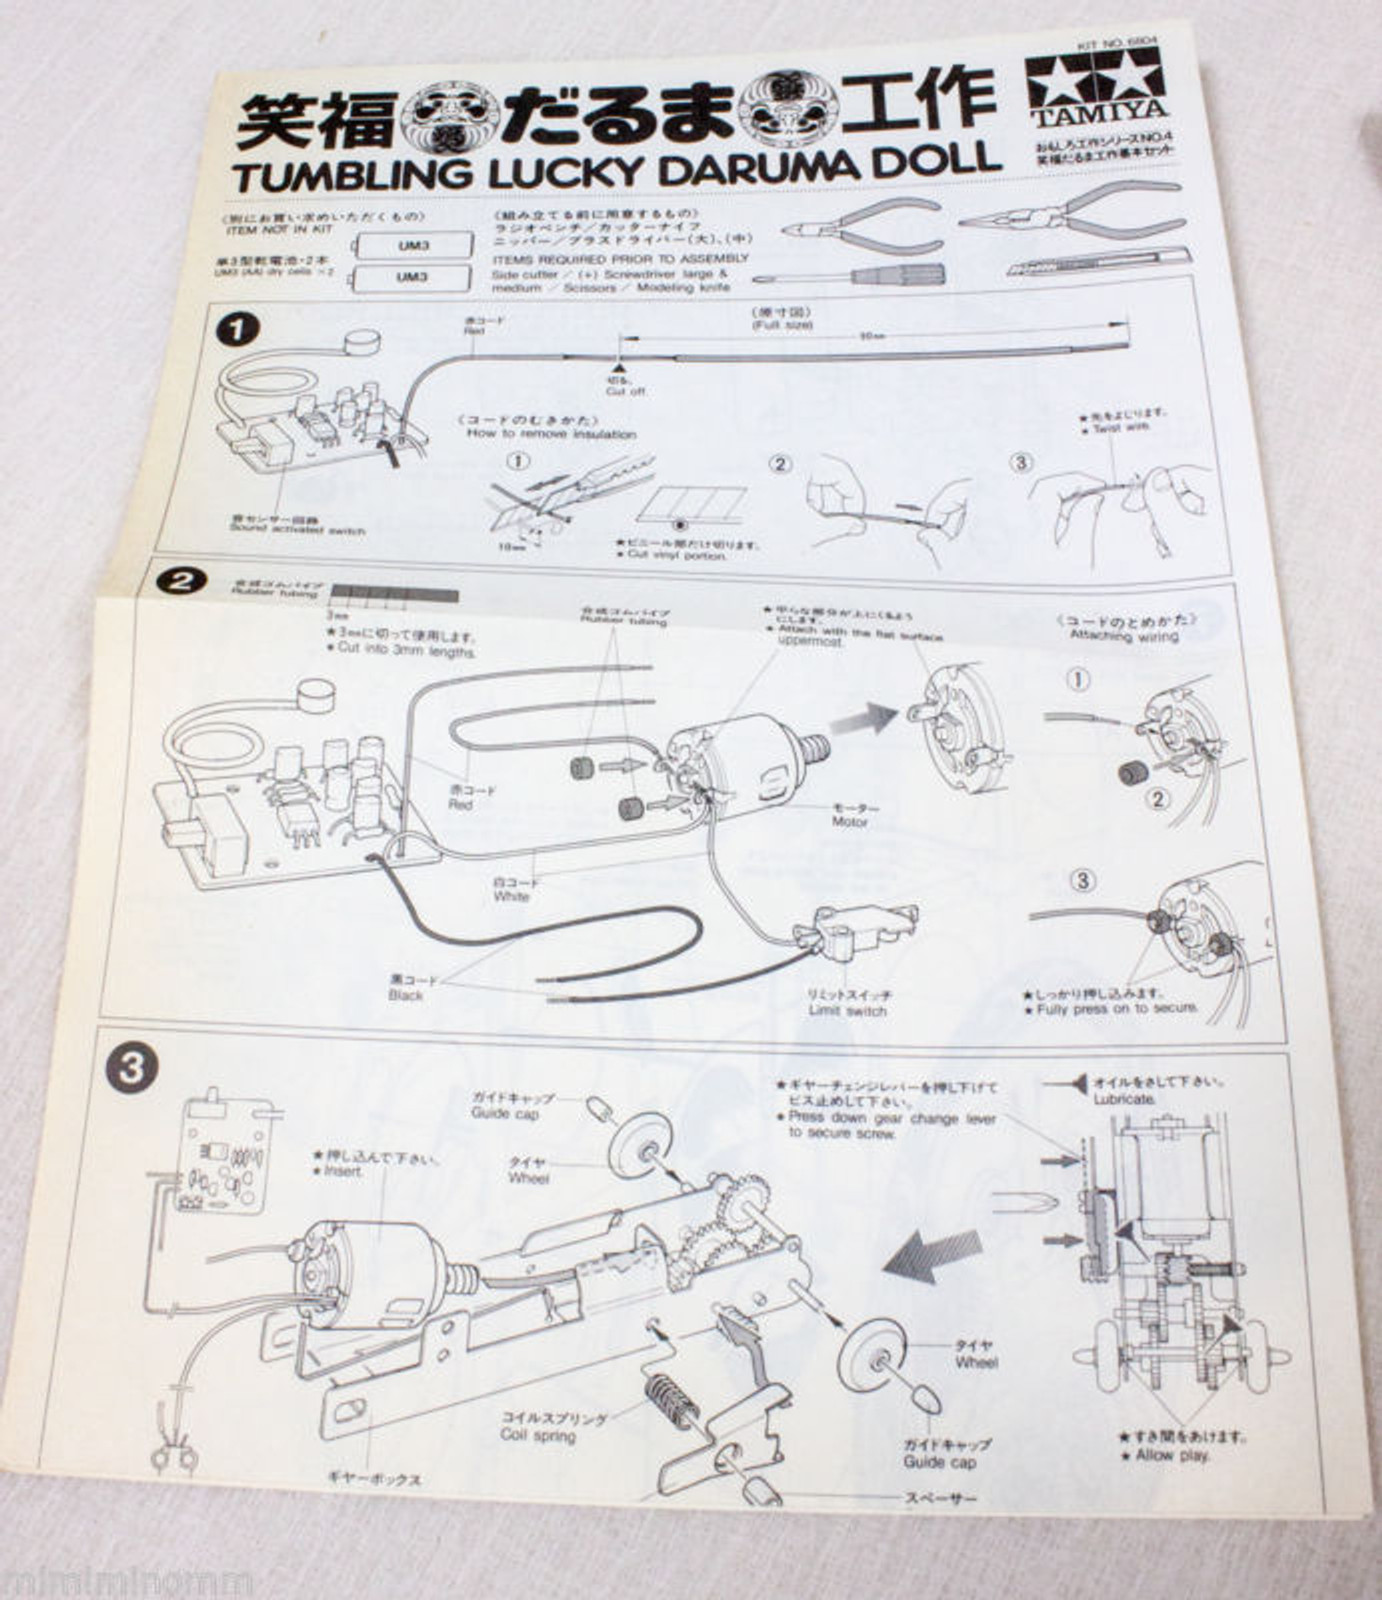 RARE Tumbling Lucky Daruma Doll Sound Senser Move Plastic Model Kit TAMIYA JAPAN